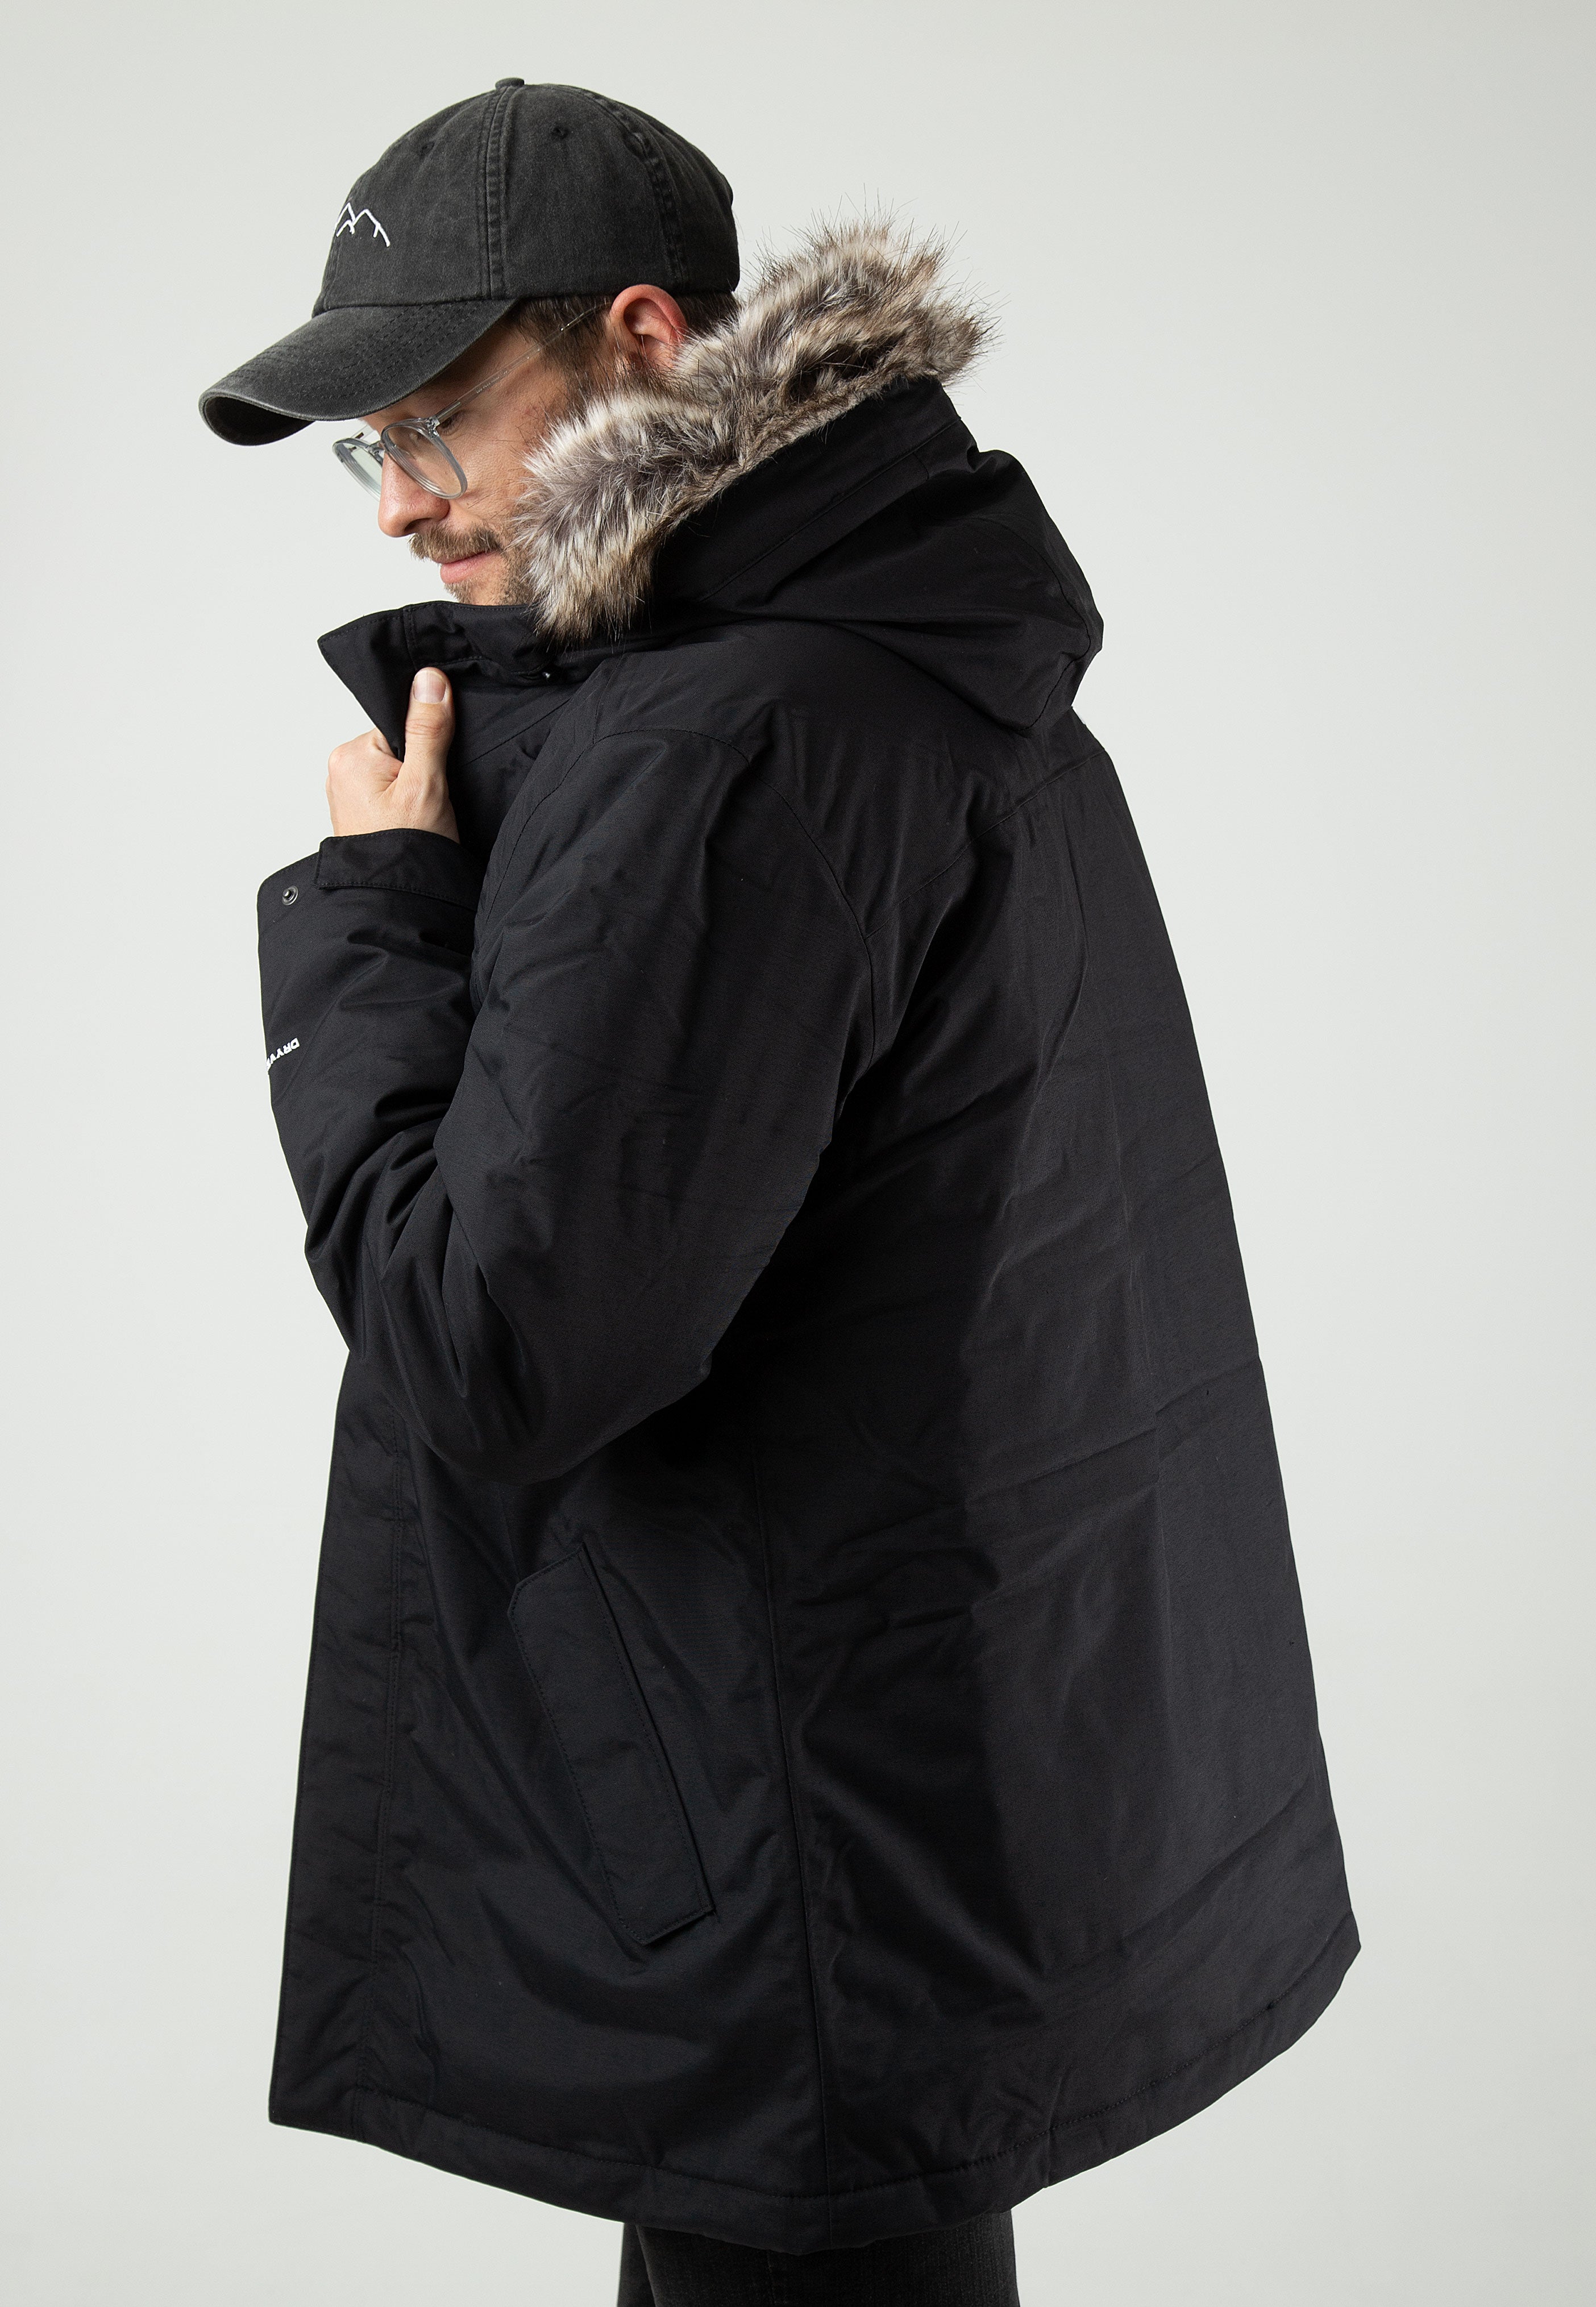 The North Face - Zaneck Tnf Black - Jacket